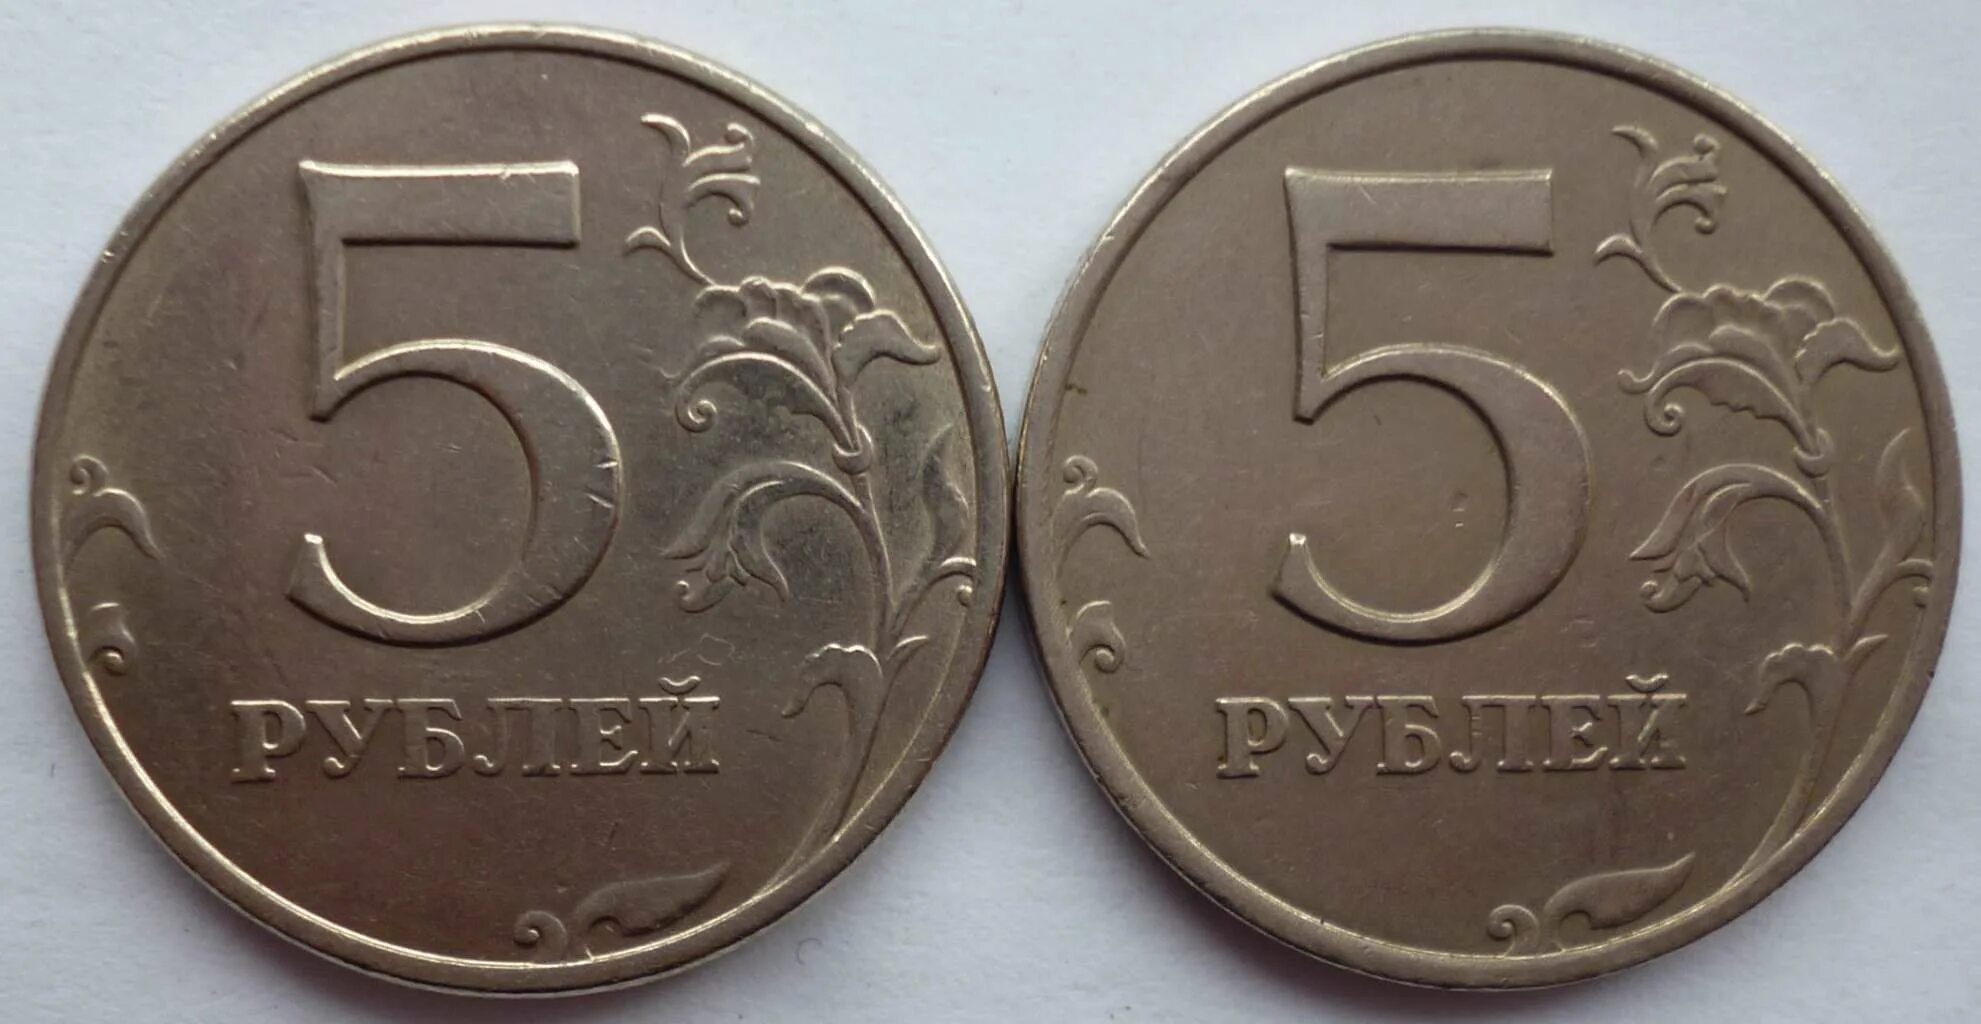 5 рублей 97. 5 Рублей СПМД 1997 штемпель 2.2.. 5 Рублей 1997 года СПМД И ММД. 5 Рублей 1997 СПМД. 5 Рублей 1997 СПМД шт 3.